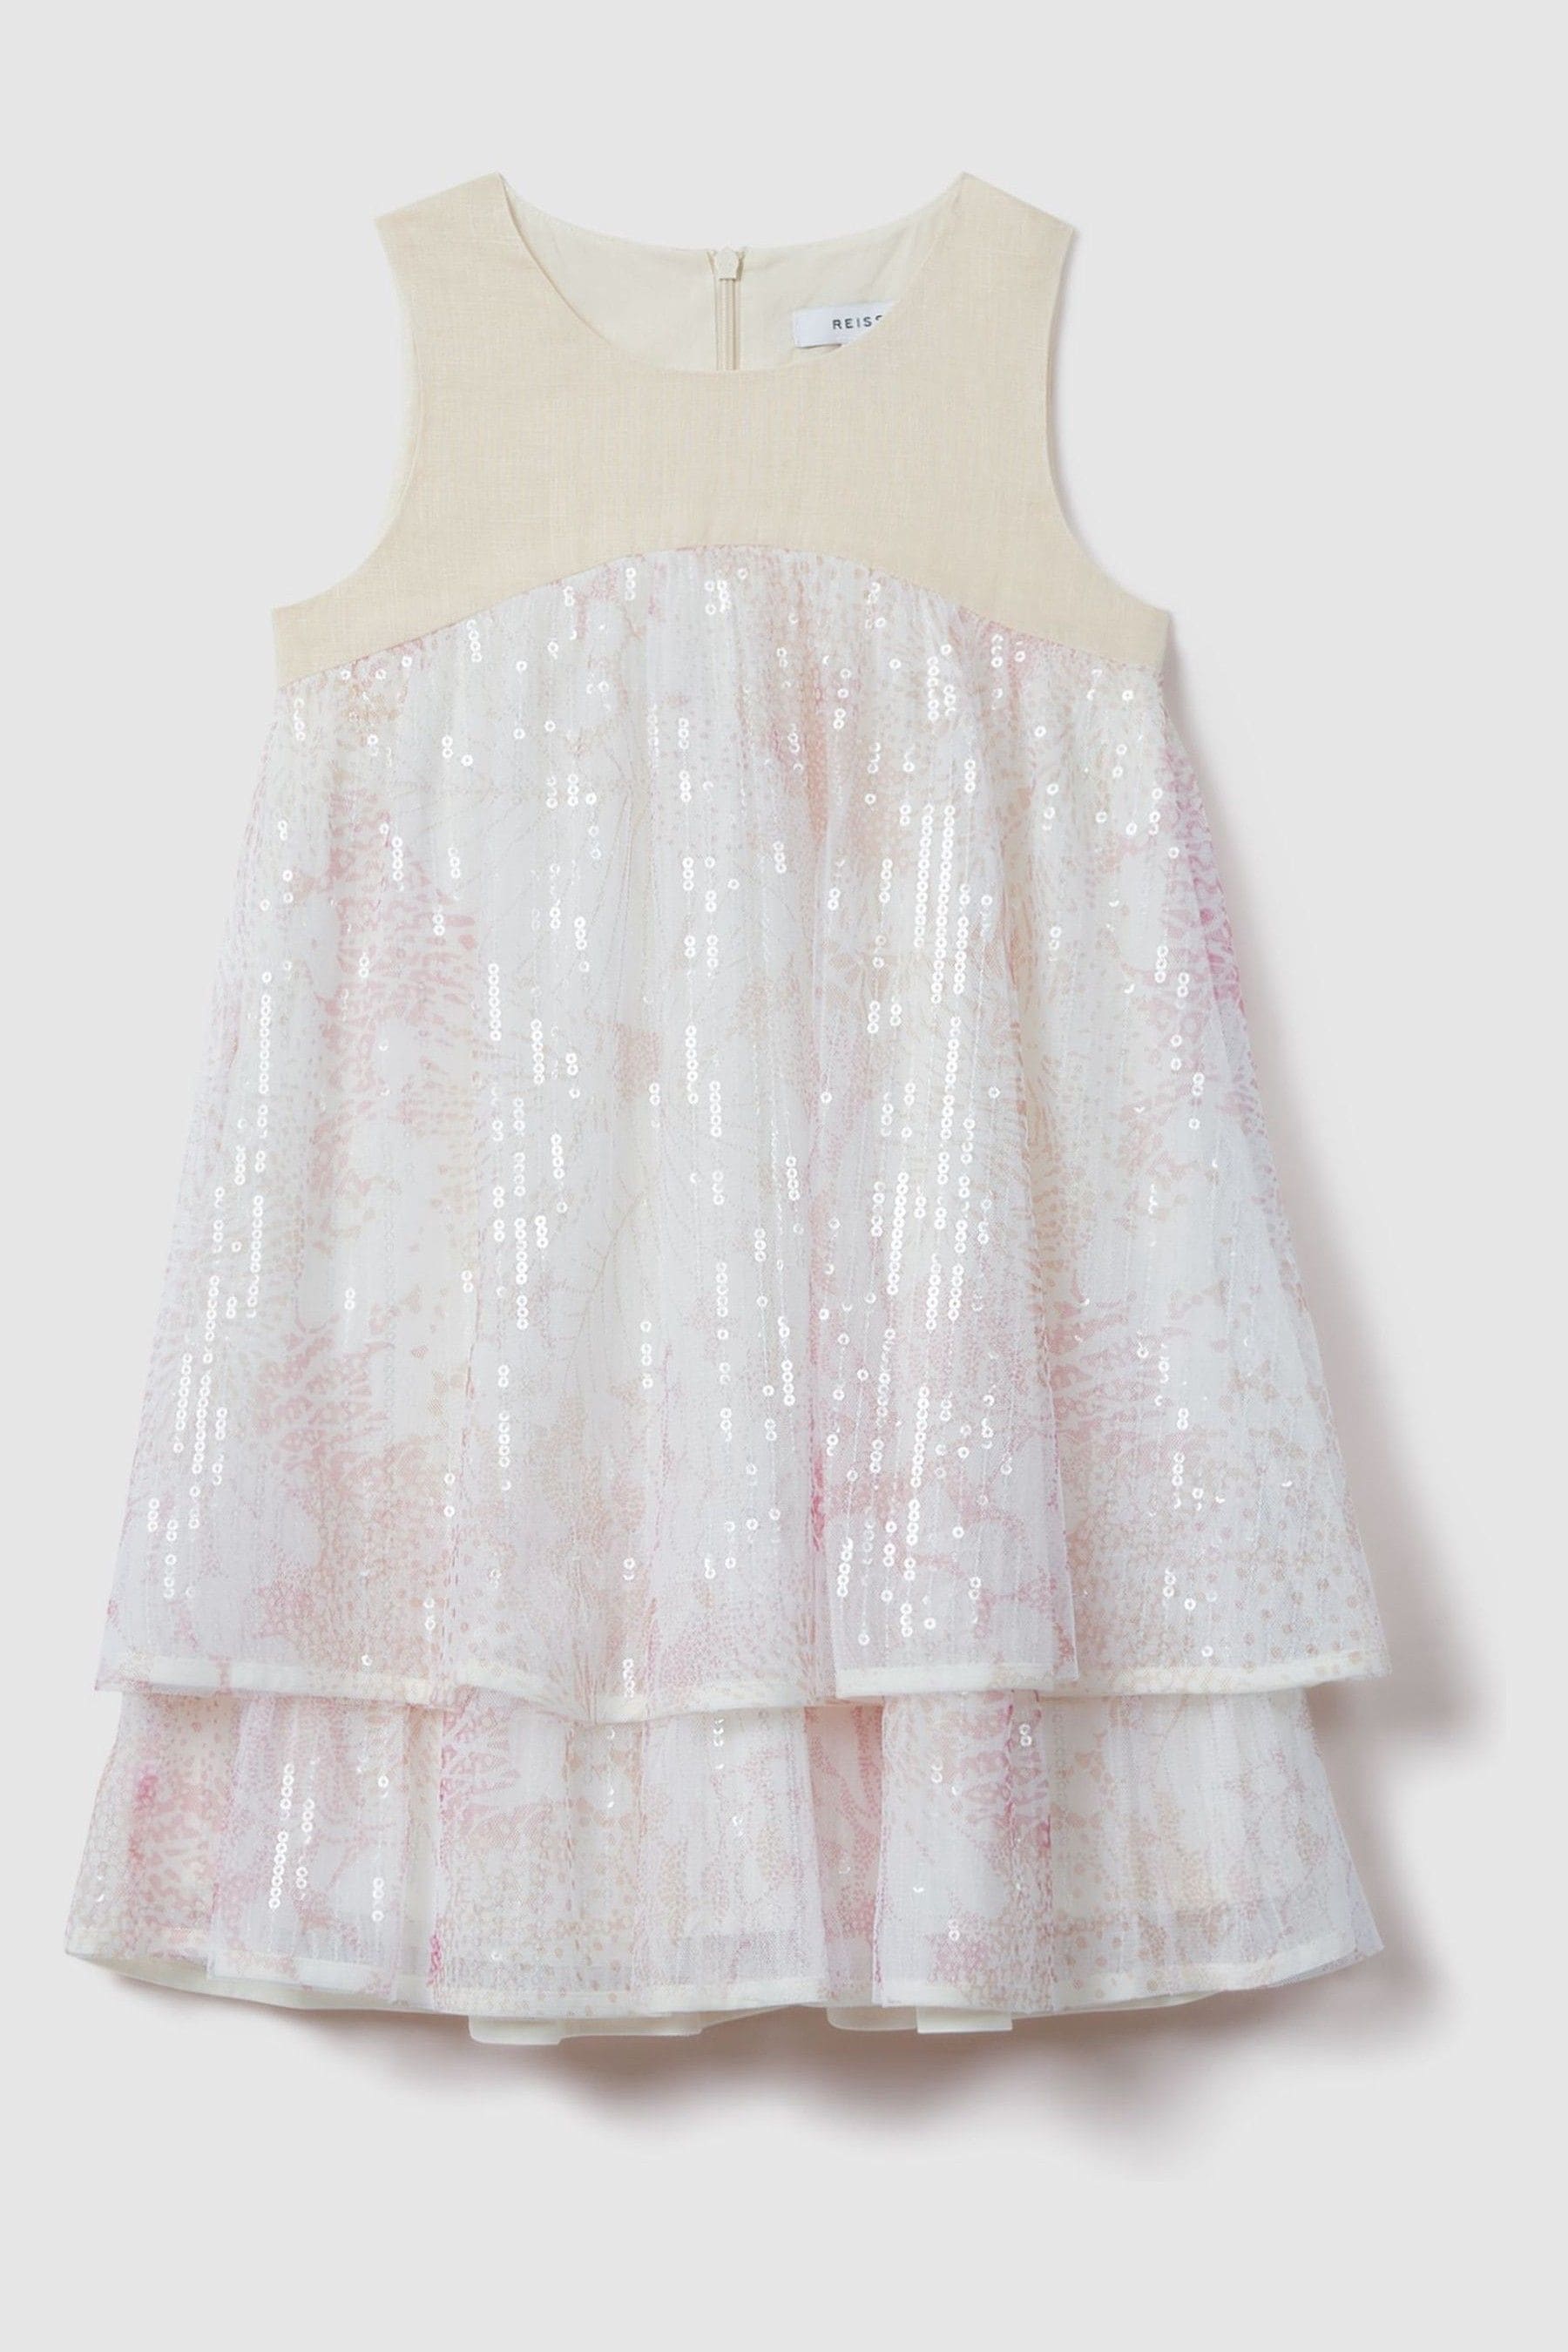 Reiss Kids' Daisy - Pink Tiered Sequin Dress, Uk 13-14 Yrs